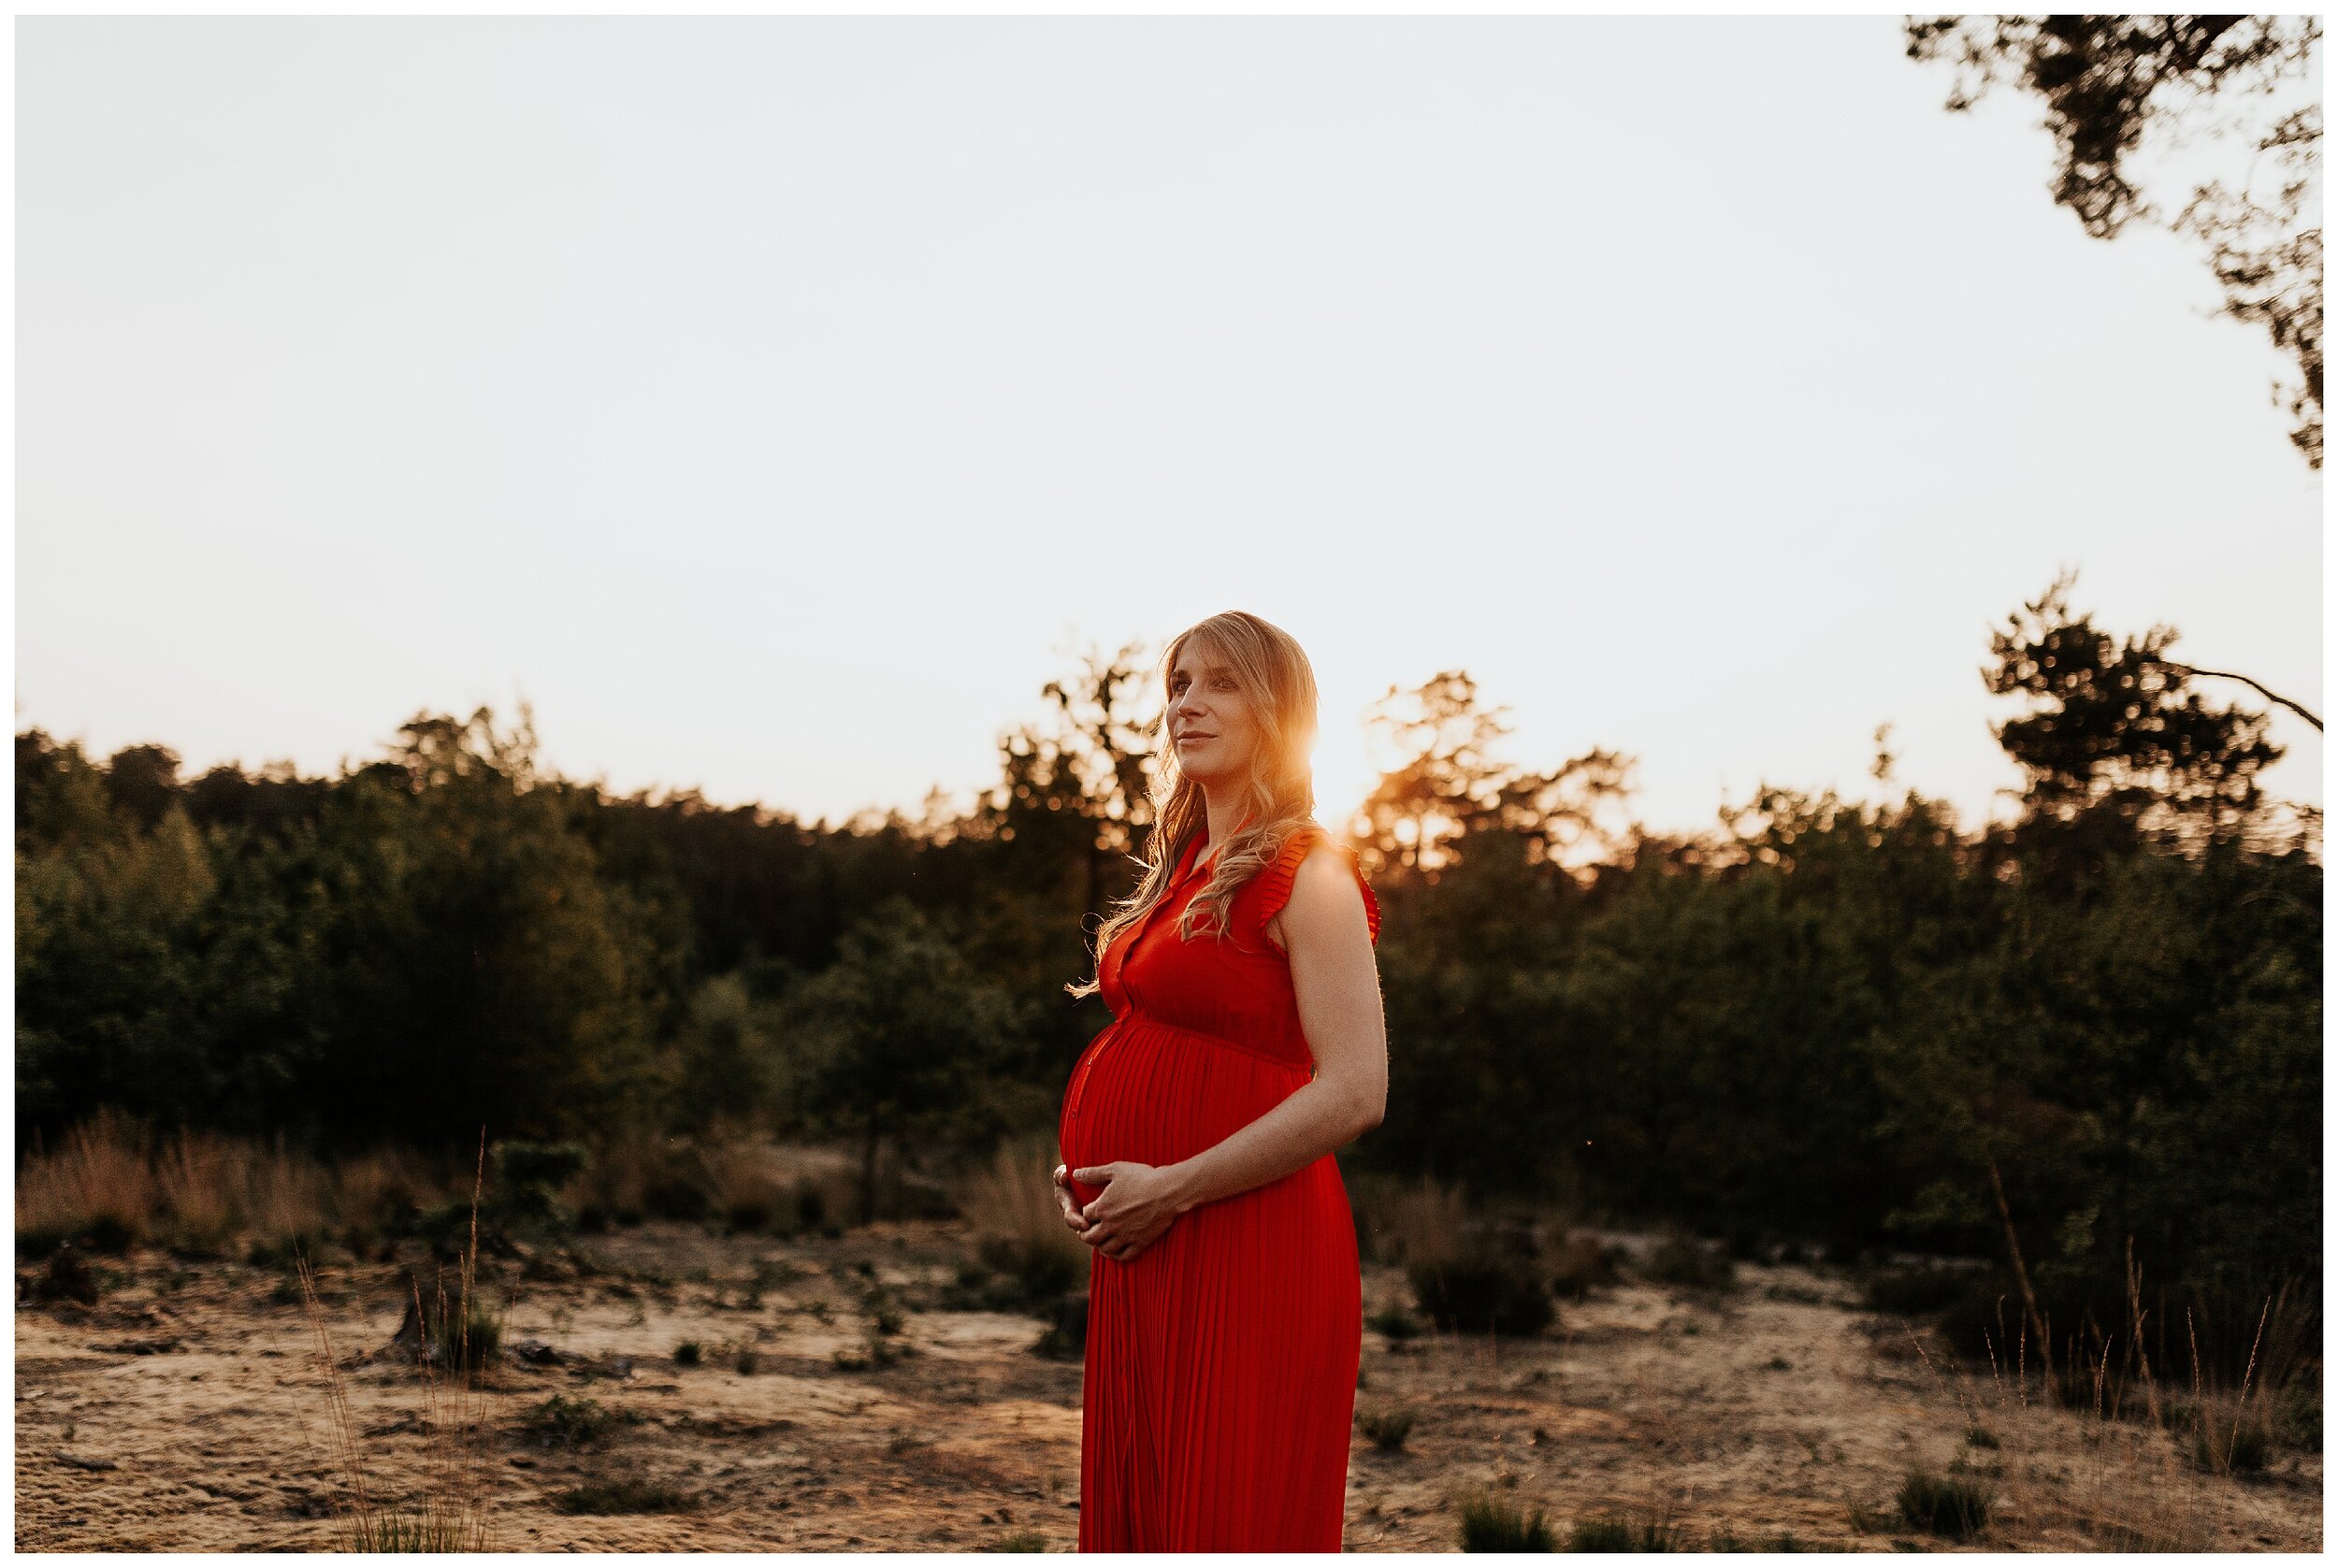 zwangerschapsfotografie-zwangerschapsshoot-zwangerschapsaankondiging-lisahelsenphotography-herentals-westerlo-herselt-kempen-vlaanderen_0004.jpg